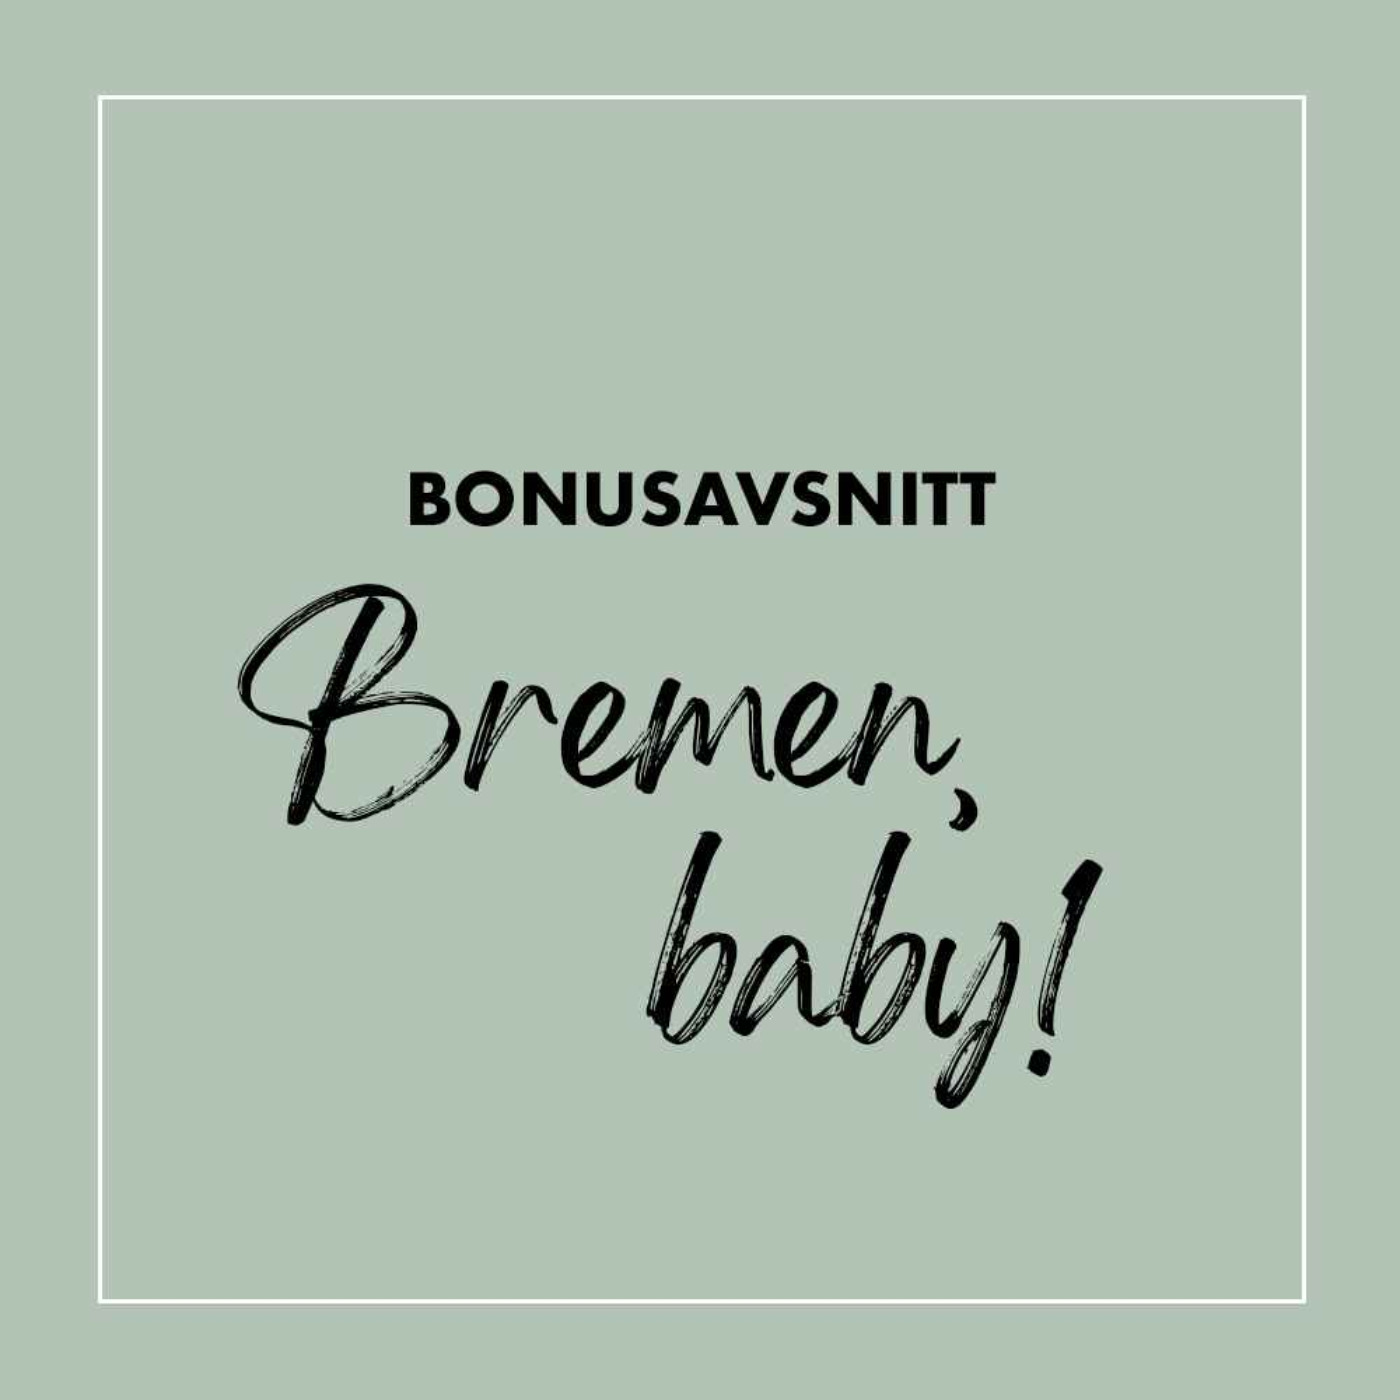 Bonus: Bremen, baby!